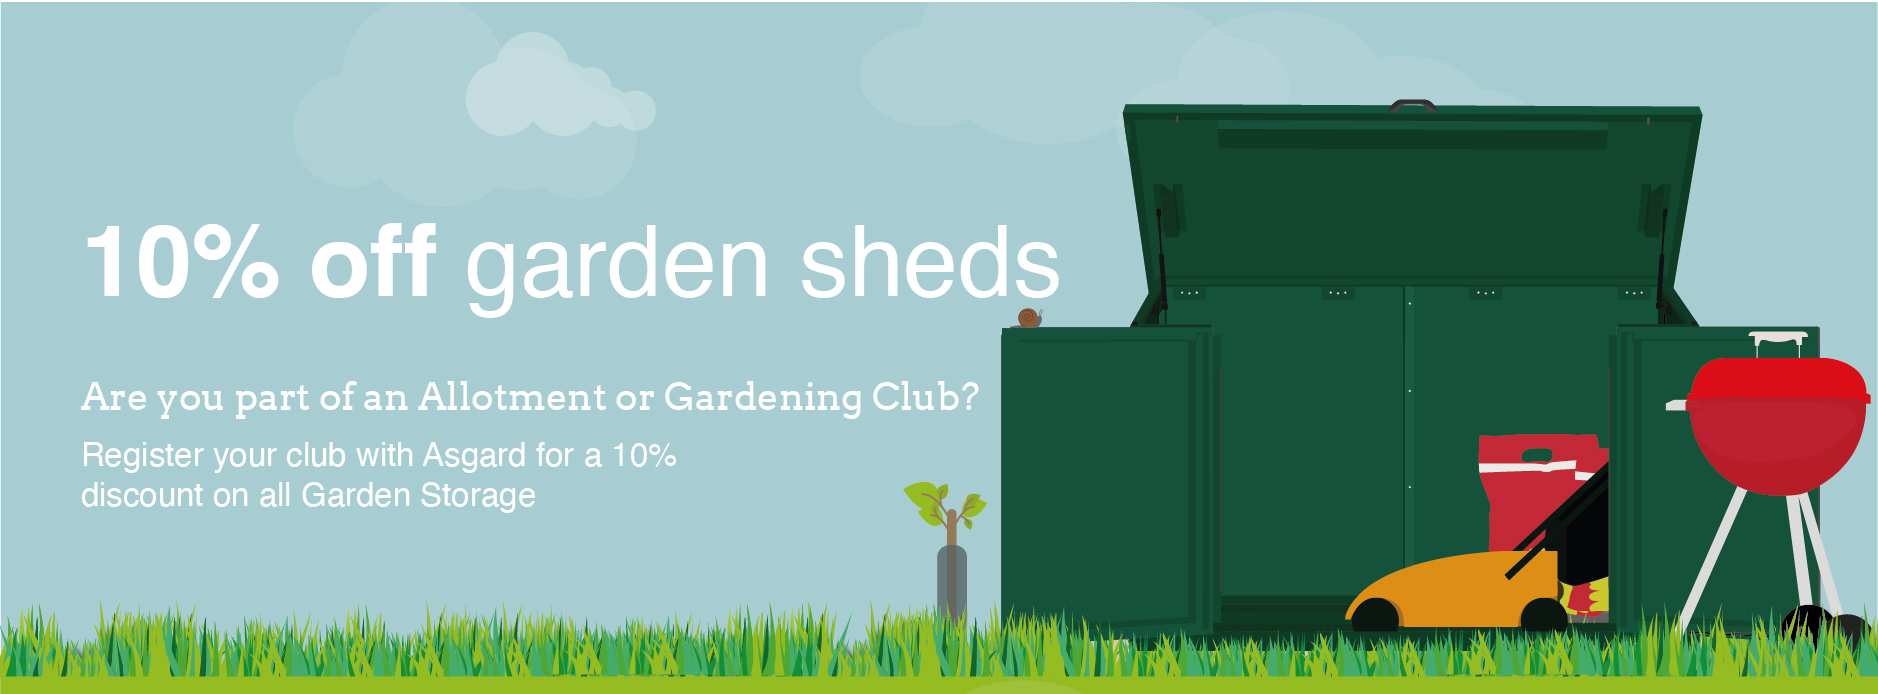 Asgard garden shed discounts